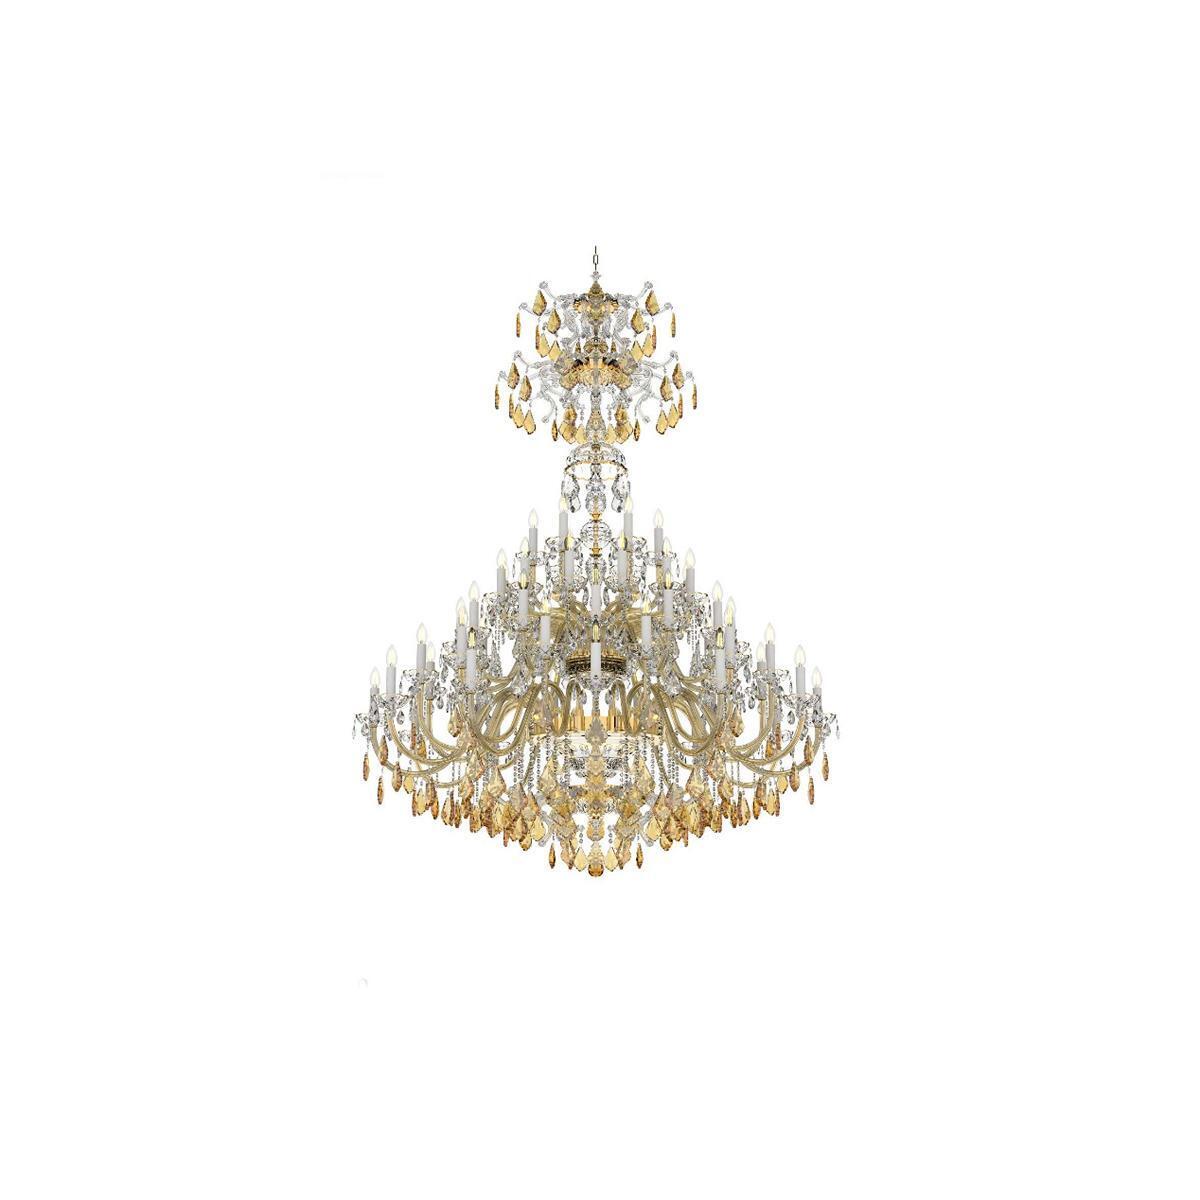 Noble crystal chandelier living room lighting interior chandelier